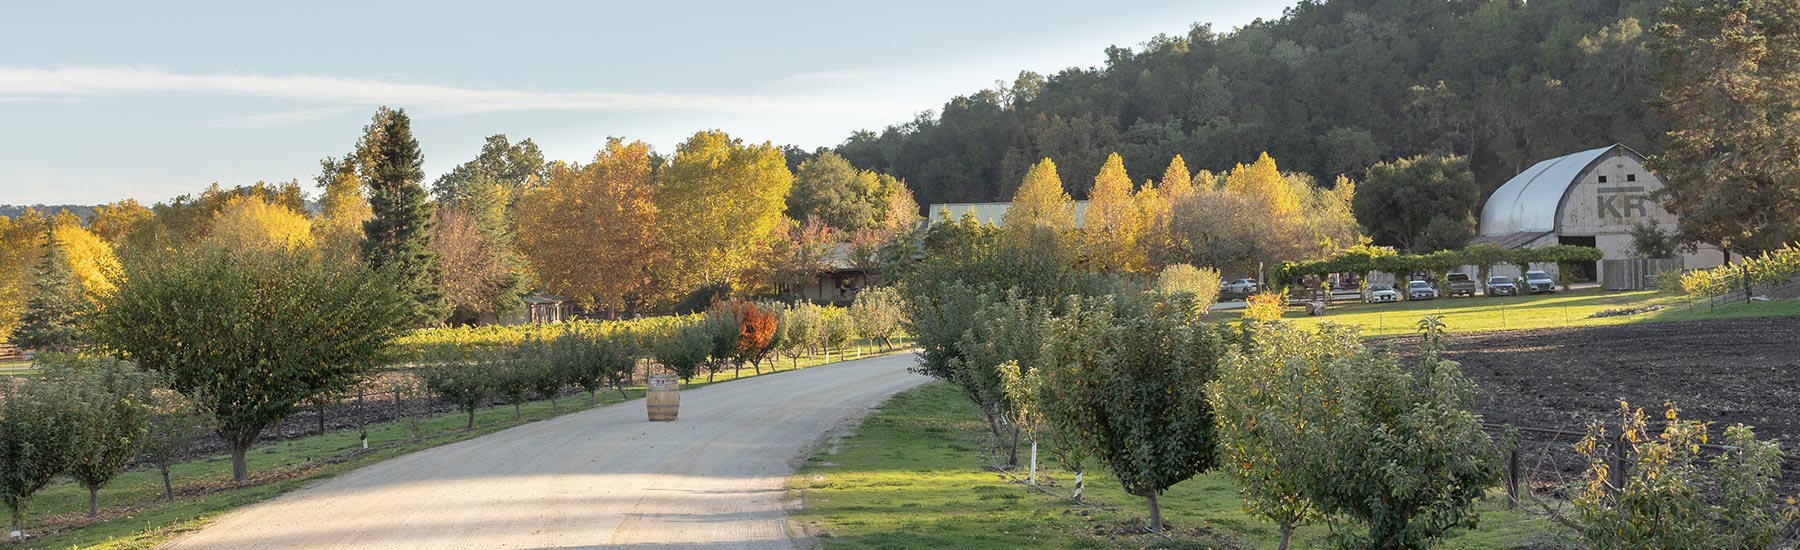 Visit the Vineyard Drive Winery